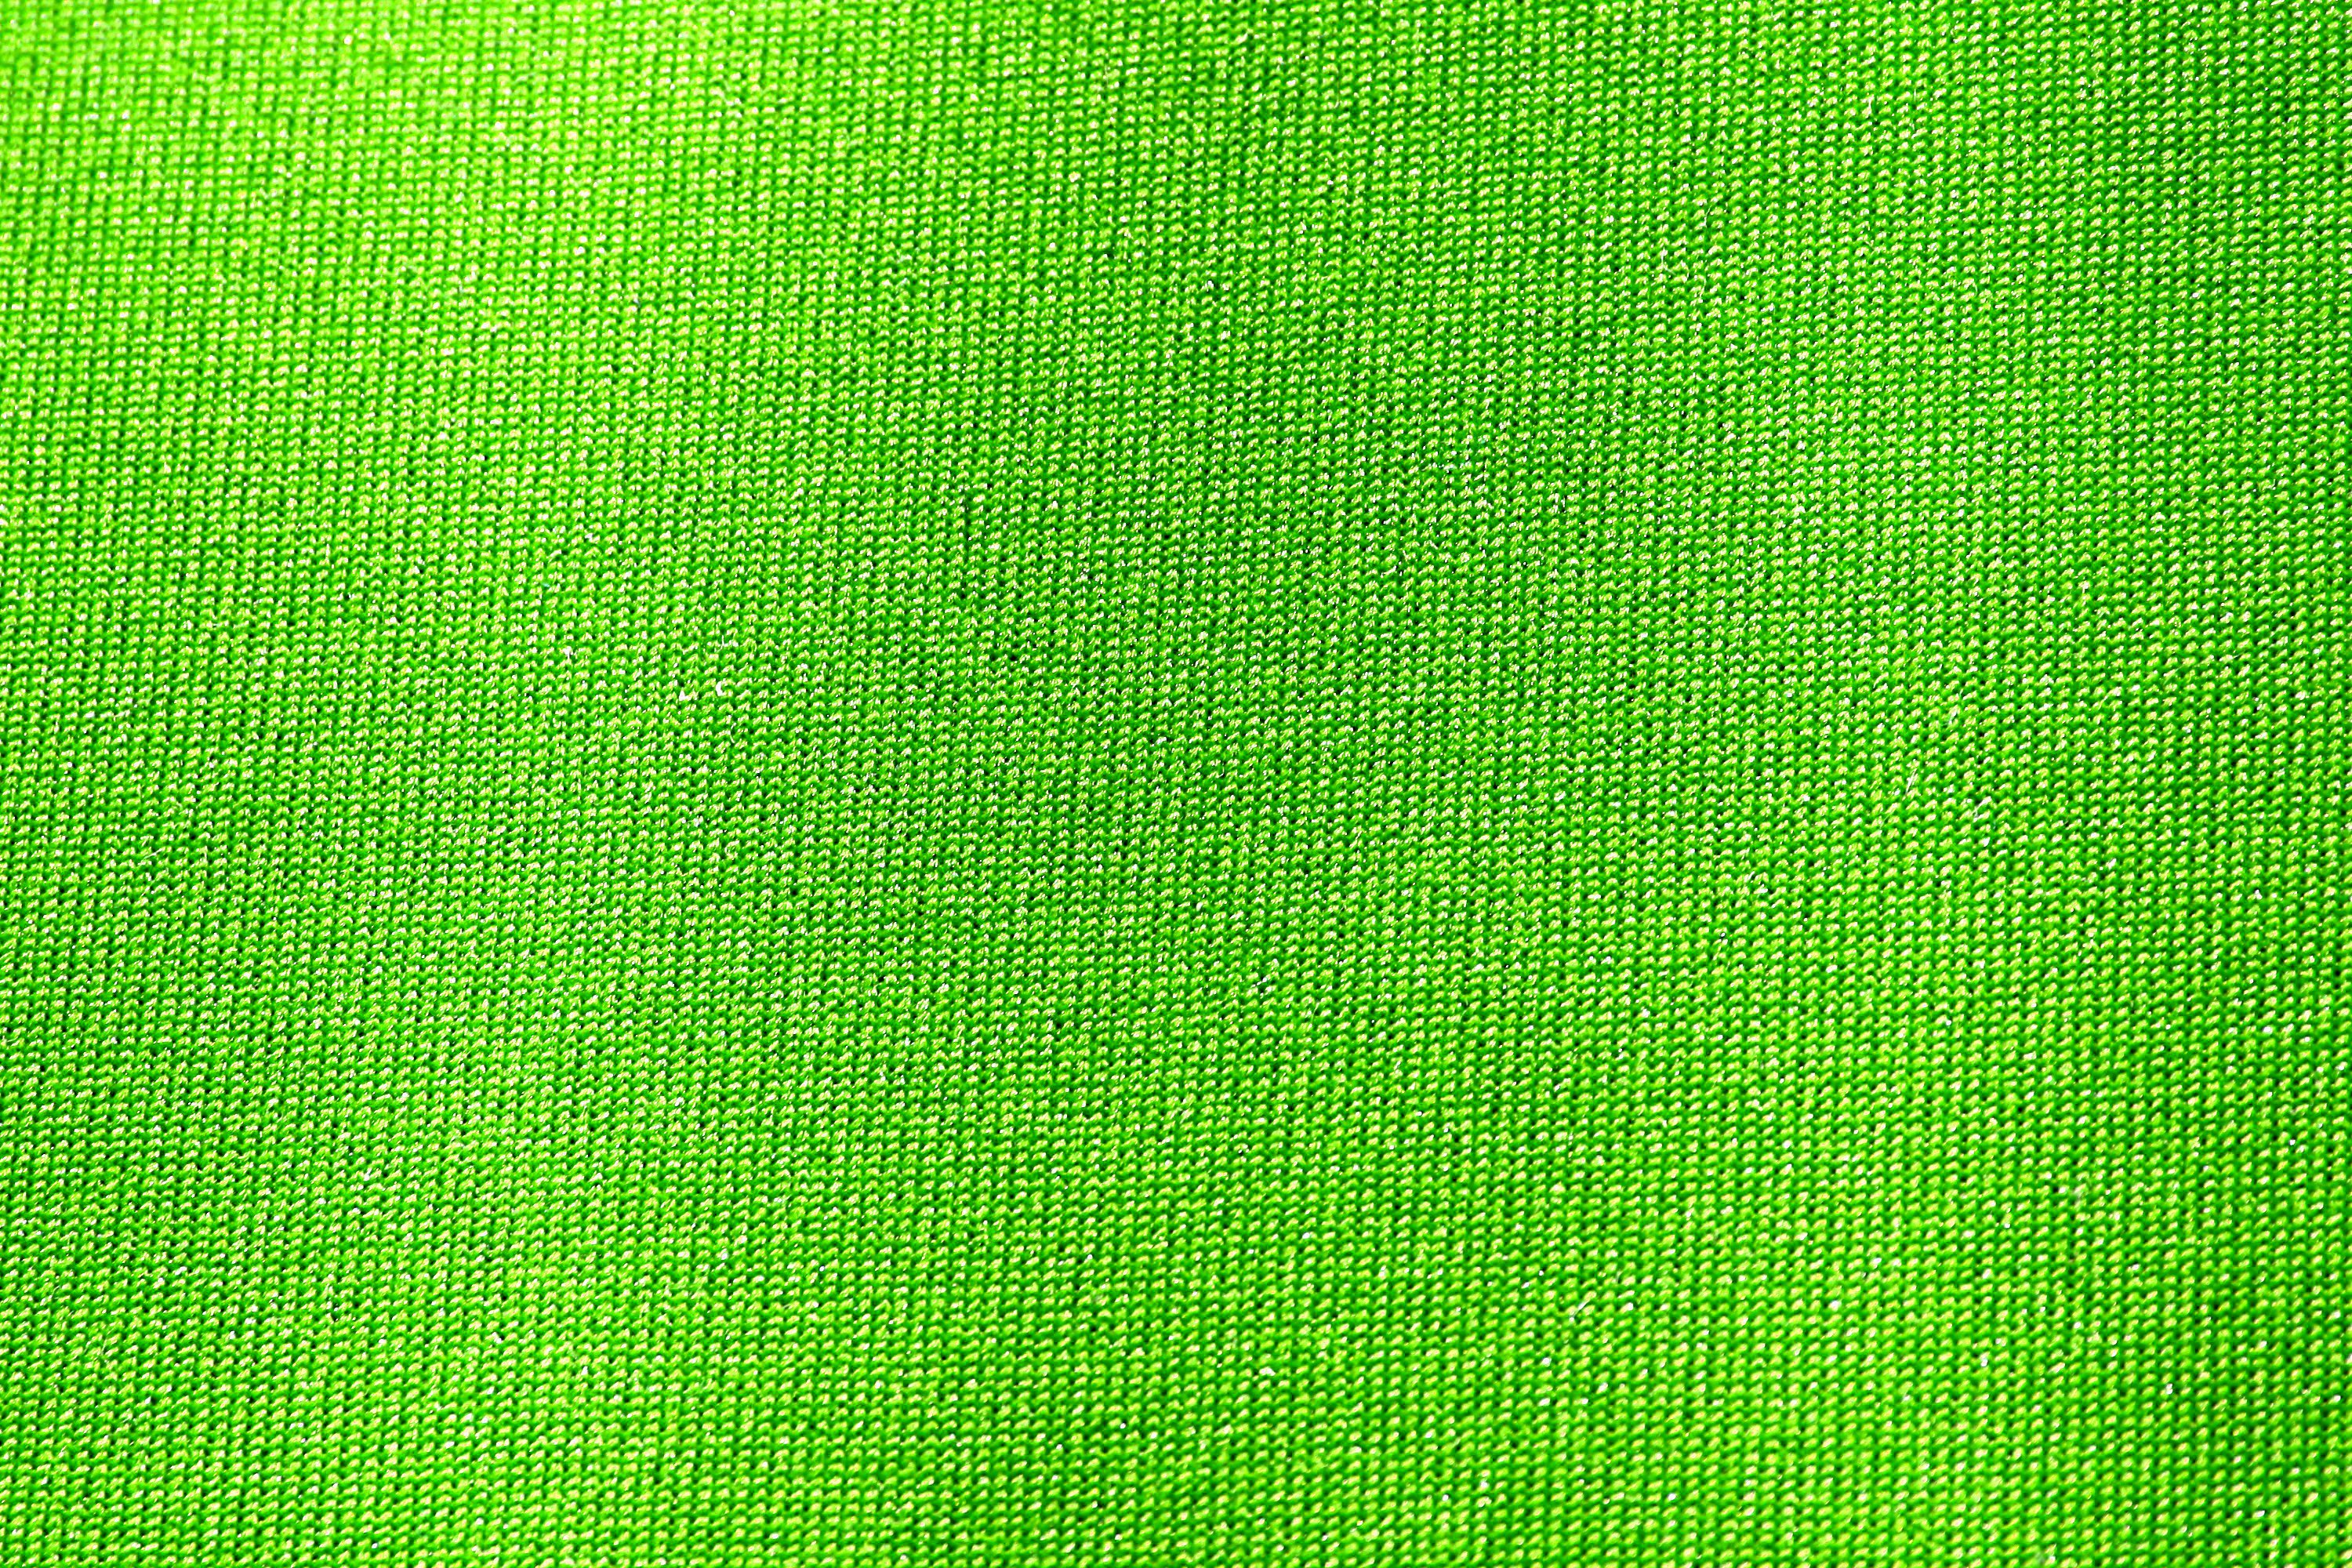 Bright Green Wallpaper Neon Nyl